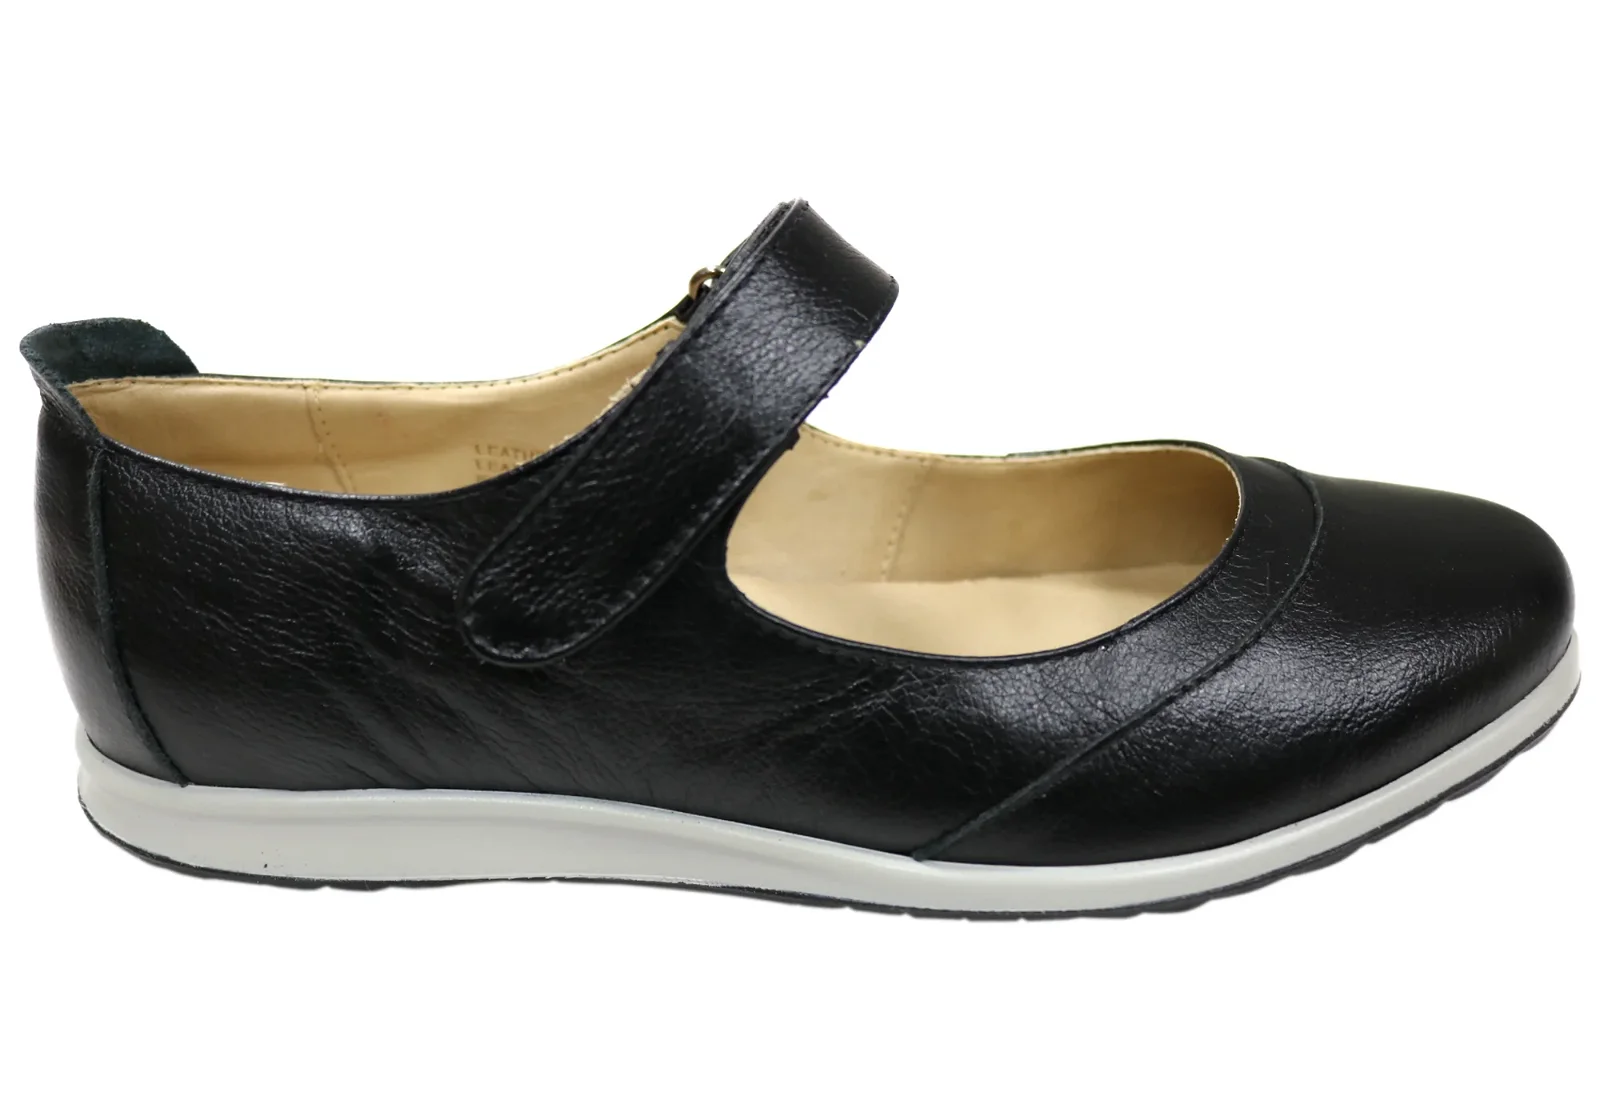 Image of Opananken Trixy Womens Comfortable Brazilian Leather Mary Jane Shoes